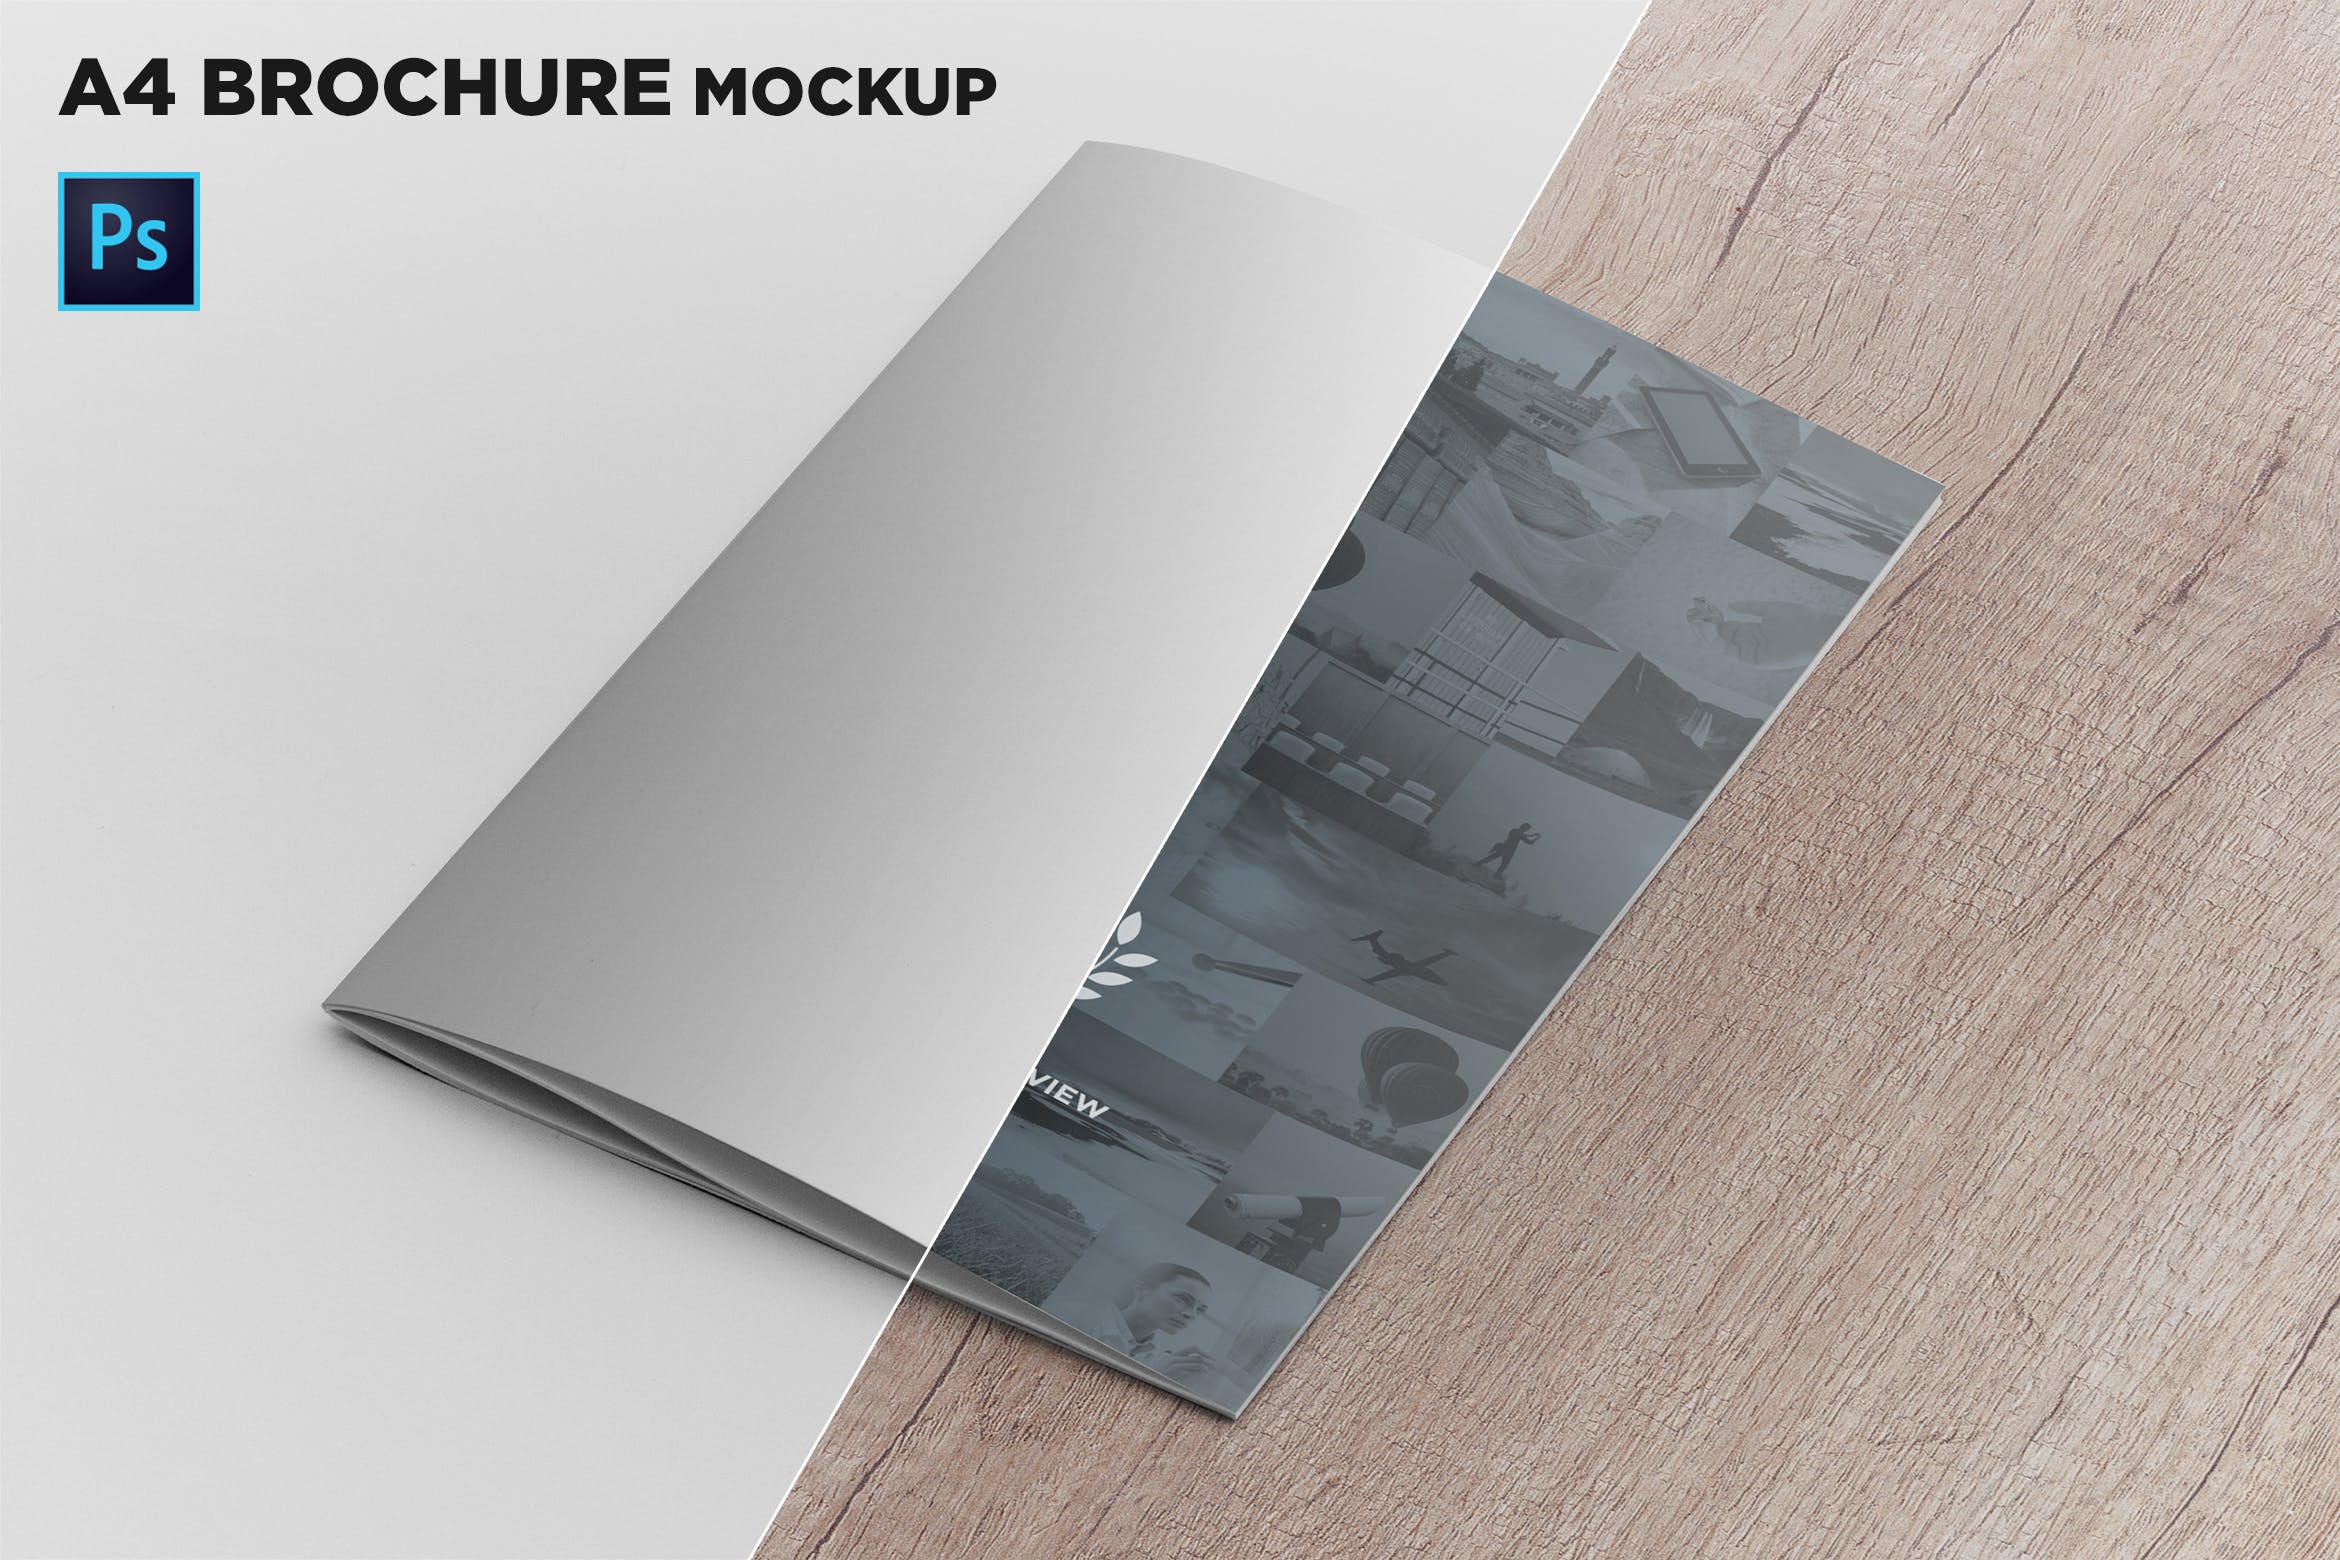 A4尺寸企业/品牌宣传册封面效果图样机16设计网精选模板 A4 Brochure Cover Mockup Perspective View插图